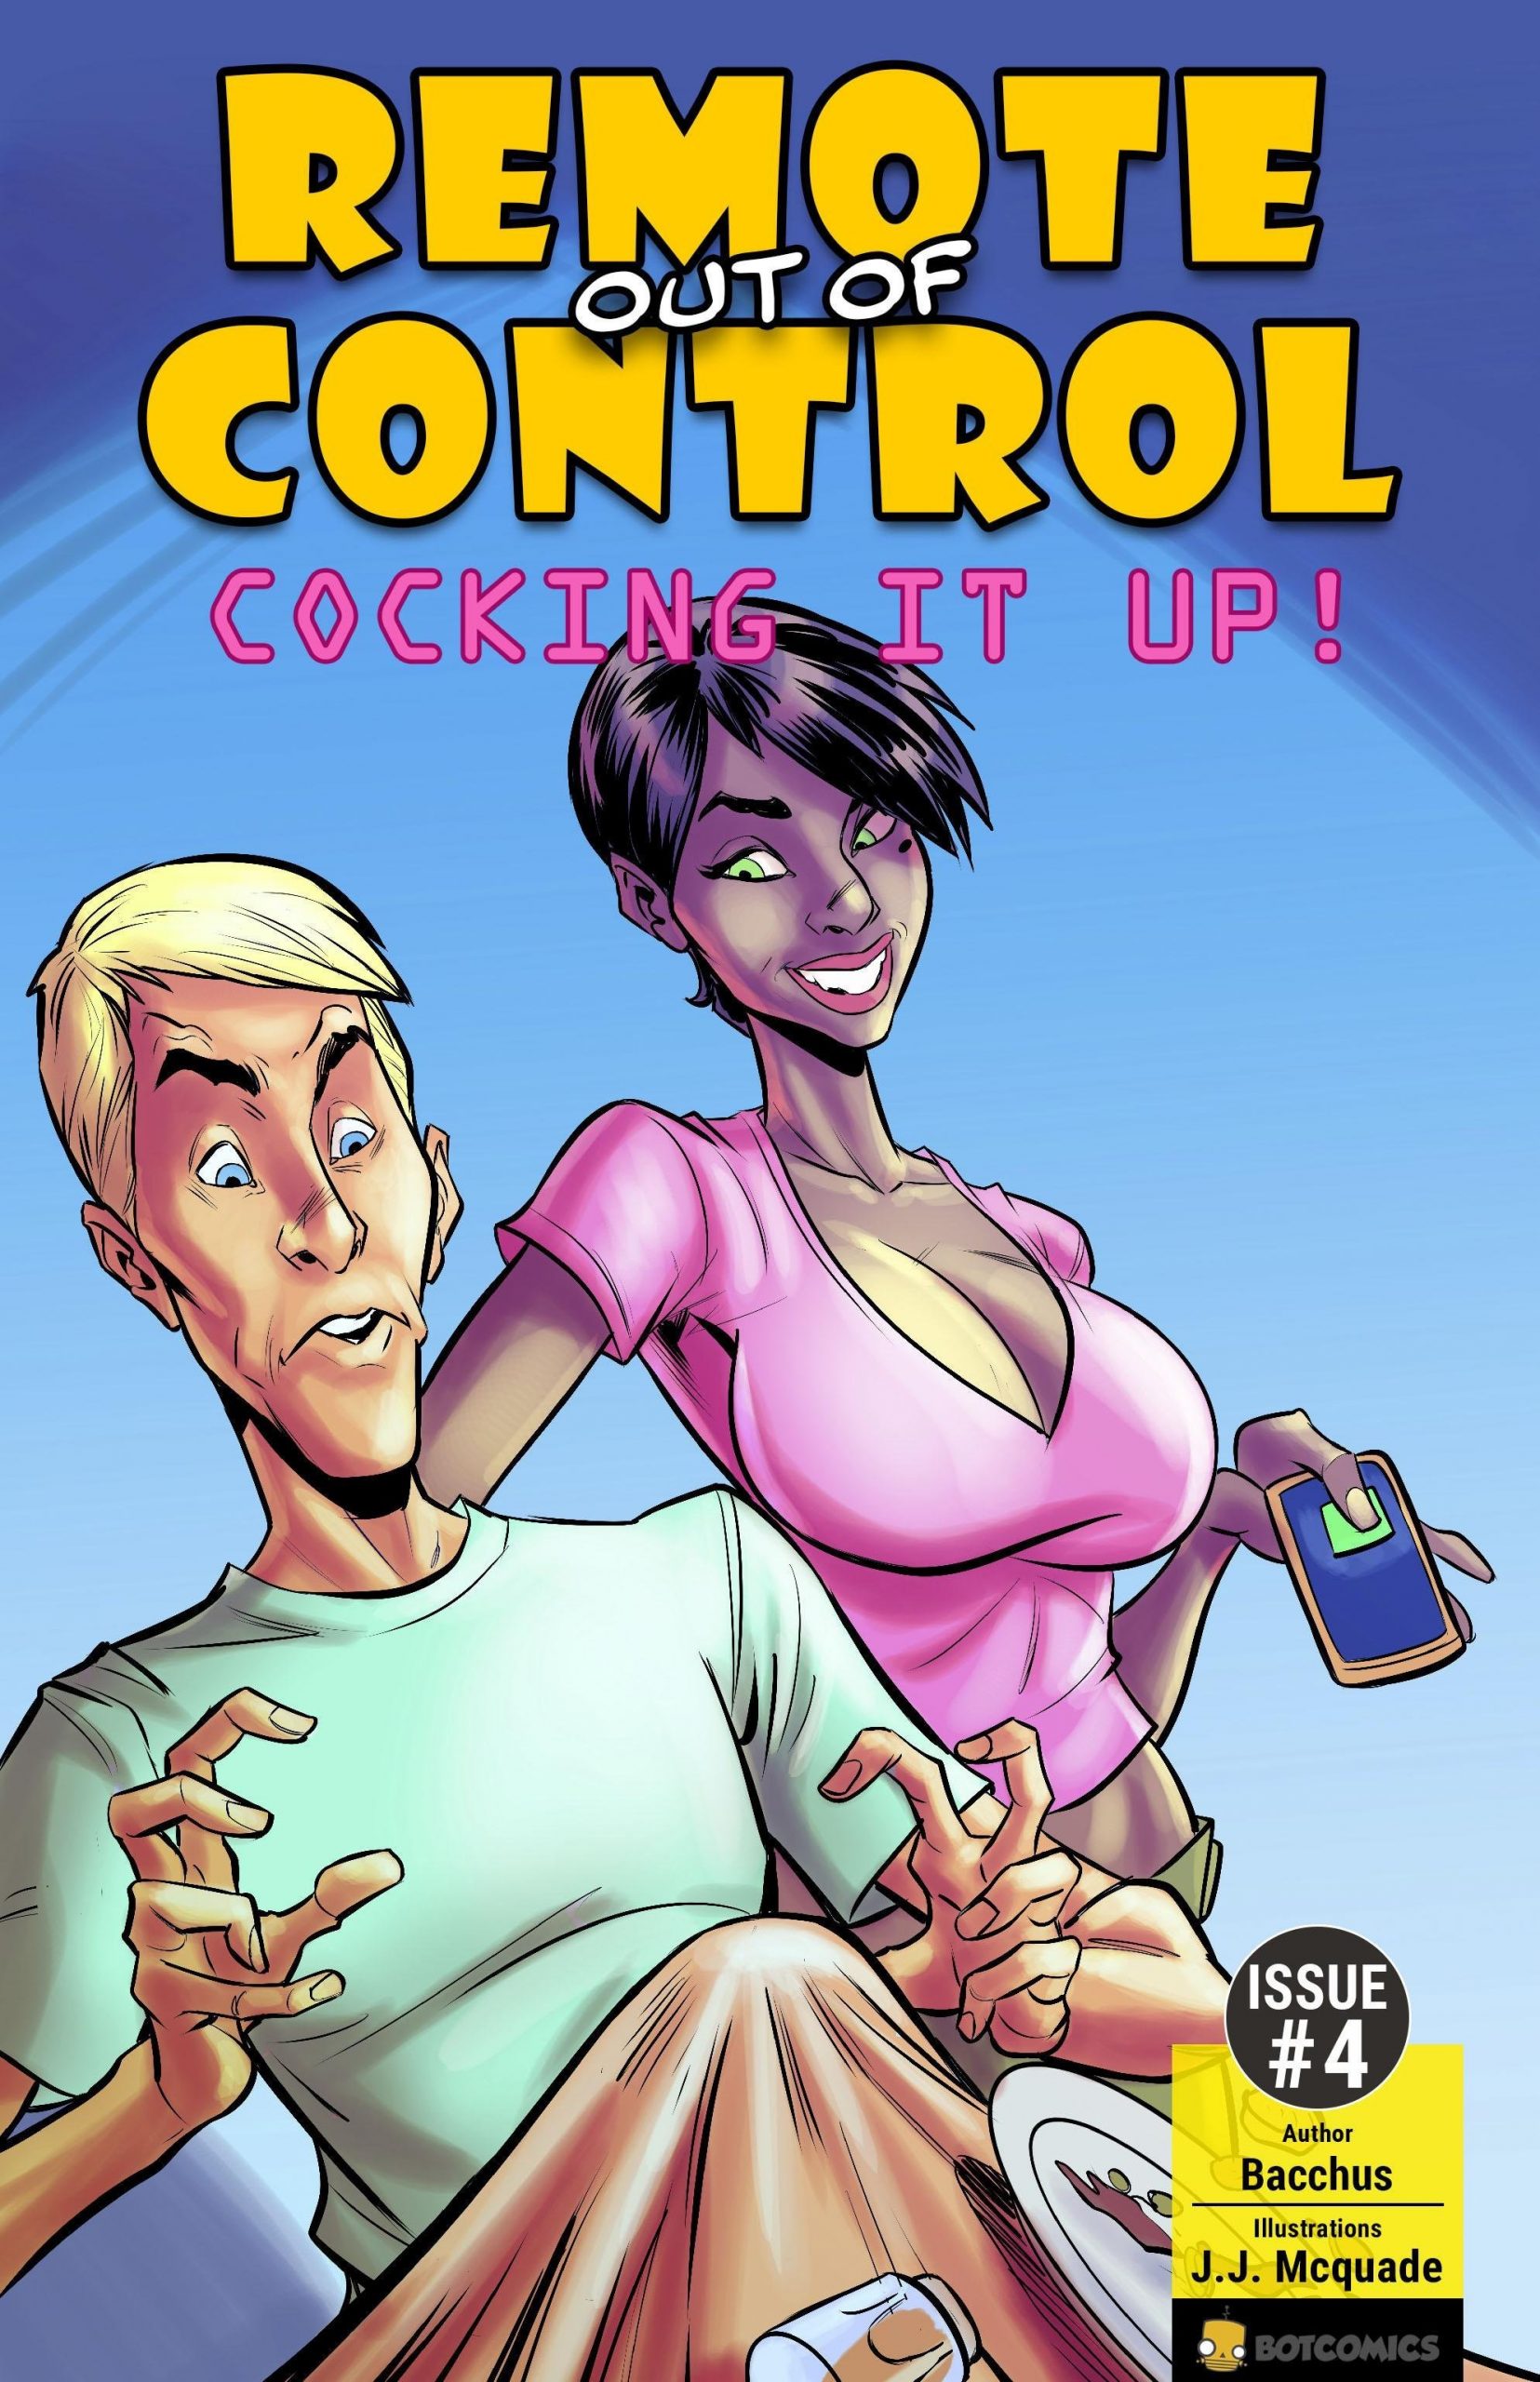 Mind control porn comic remote